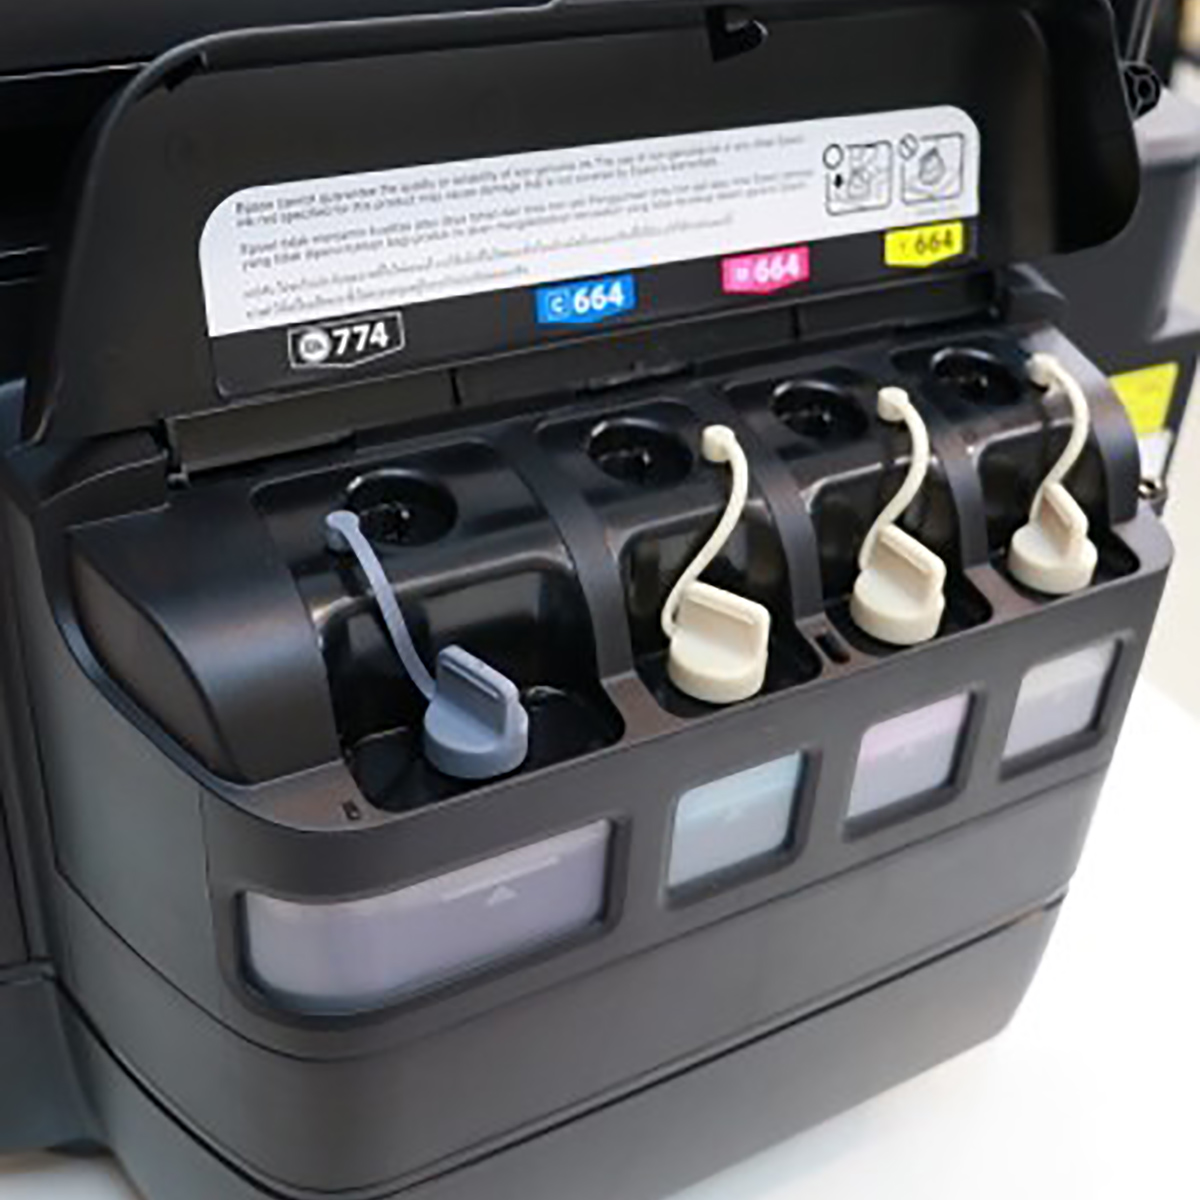 Epson L1455 A3 Wi-Fi Duplex All-in-One Ink Tank Printer